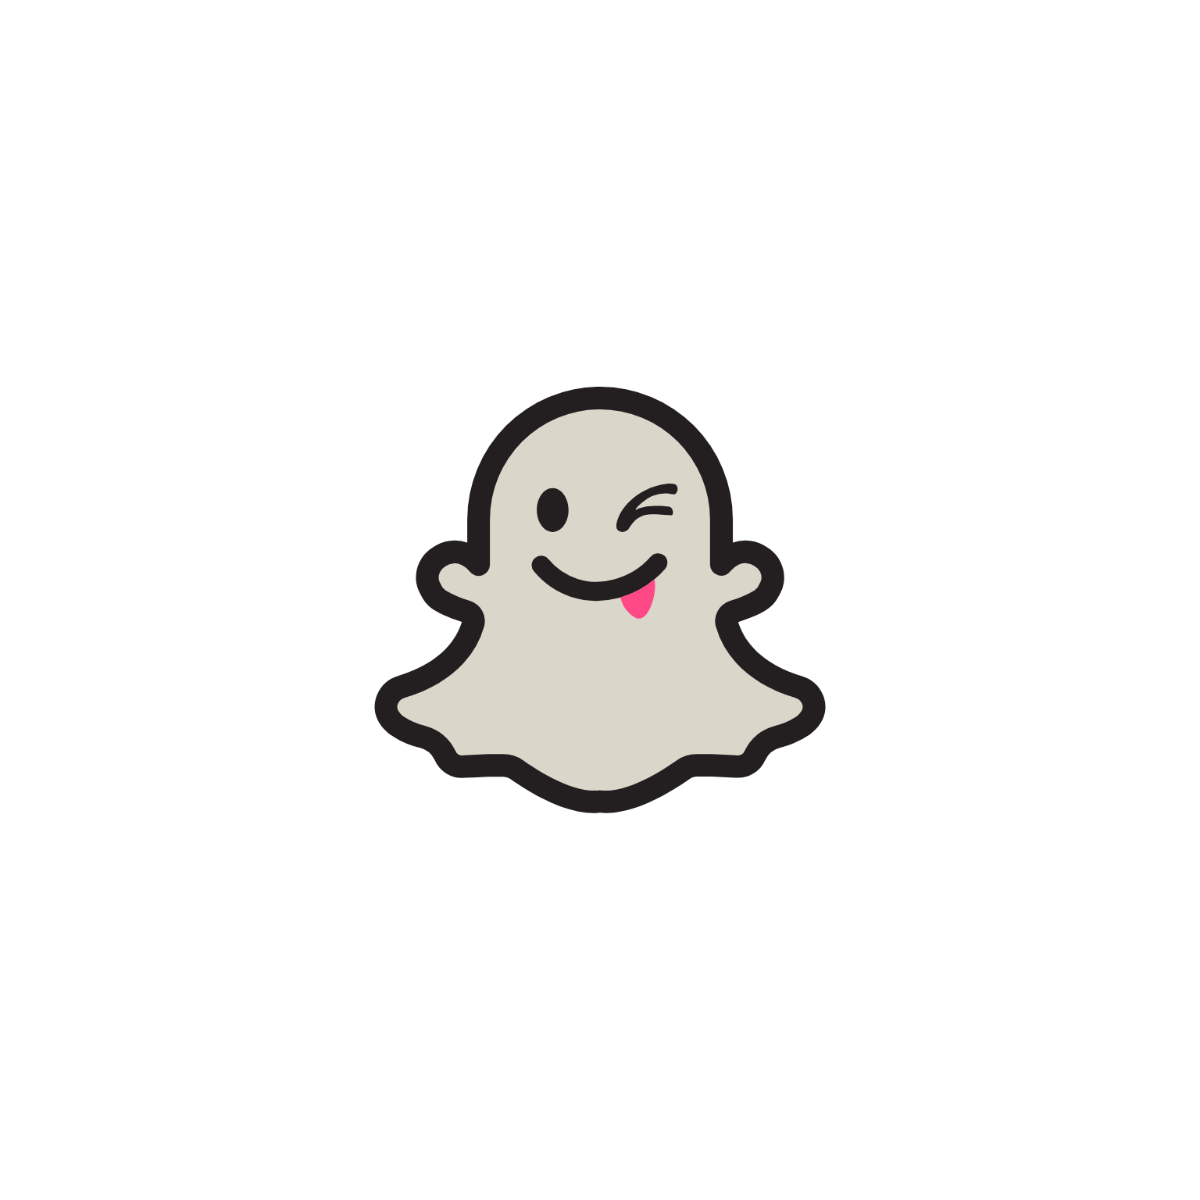 Snapchat Ghost